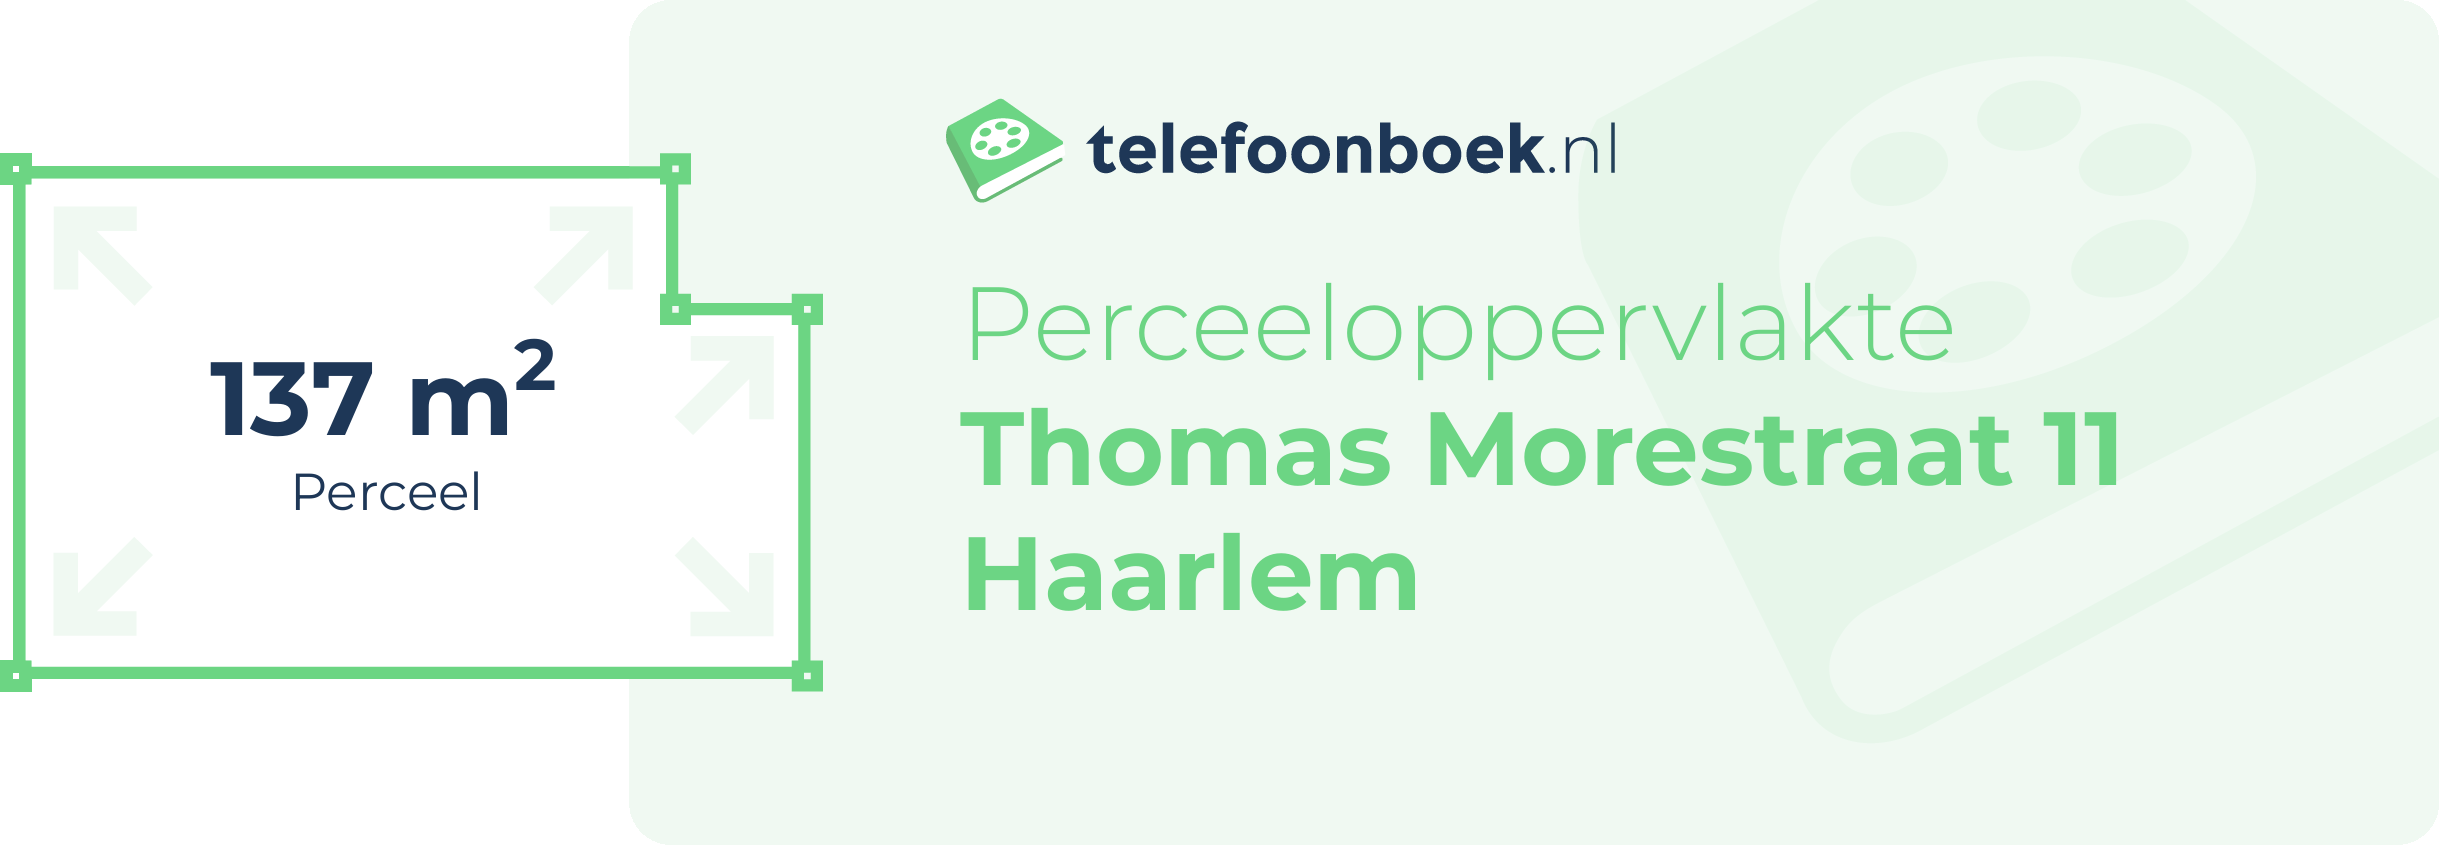 Perceeloppervlakte Thomas Morestraat 11 Haarlem